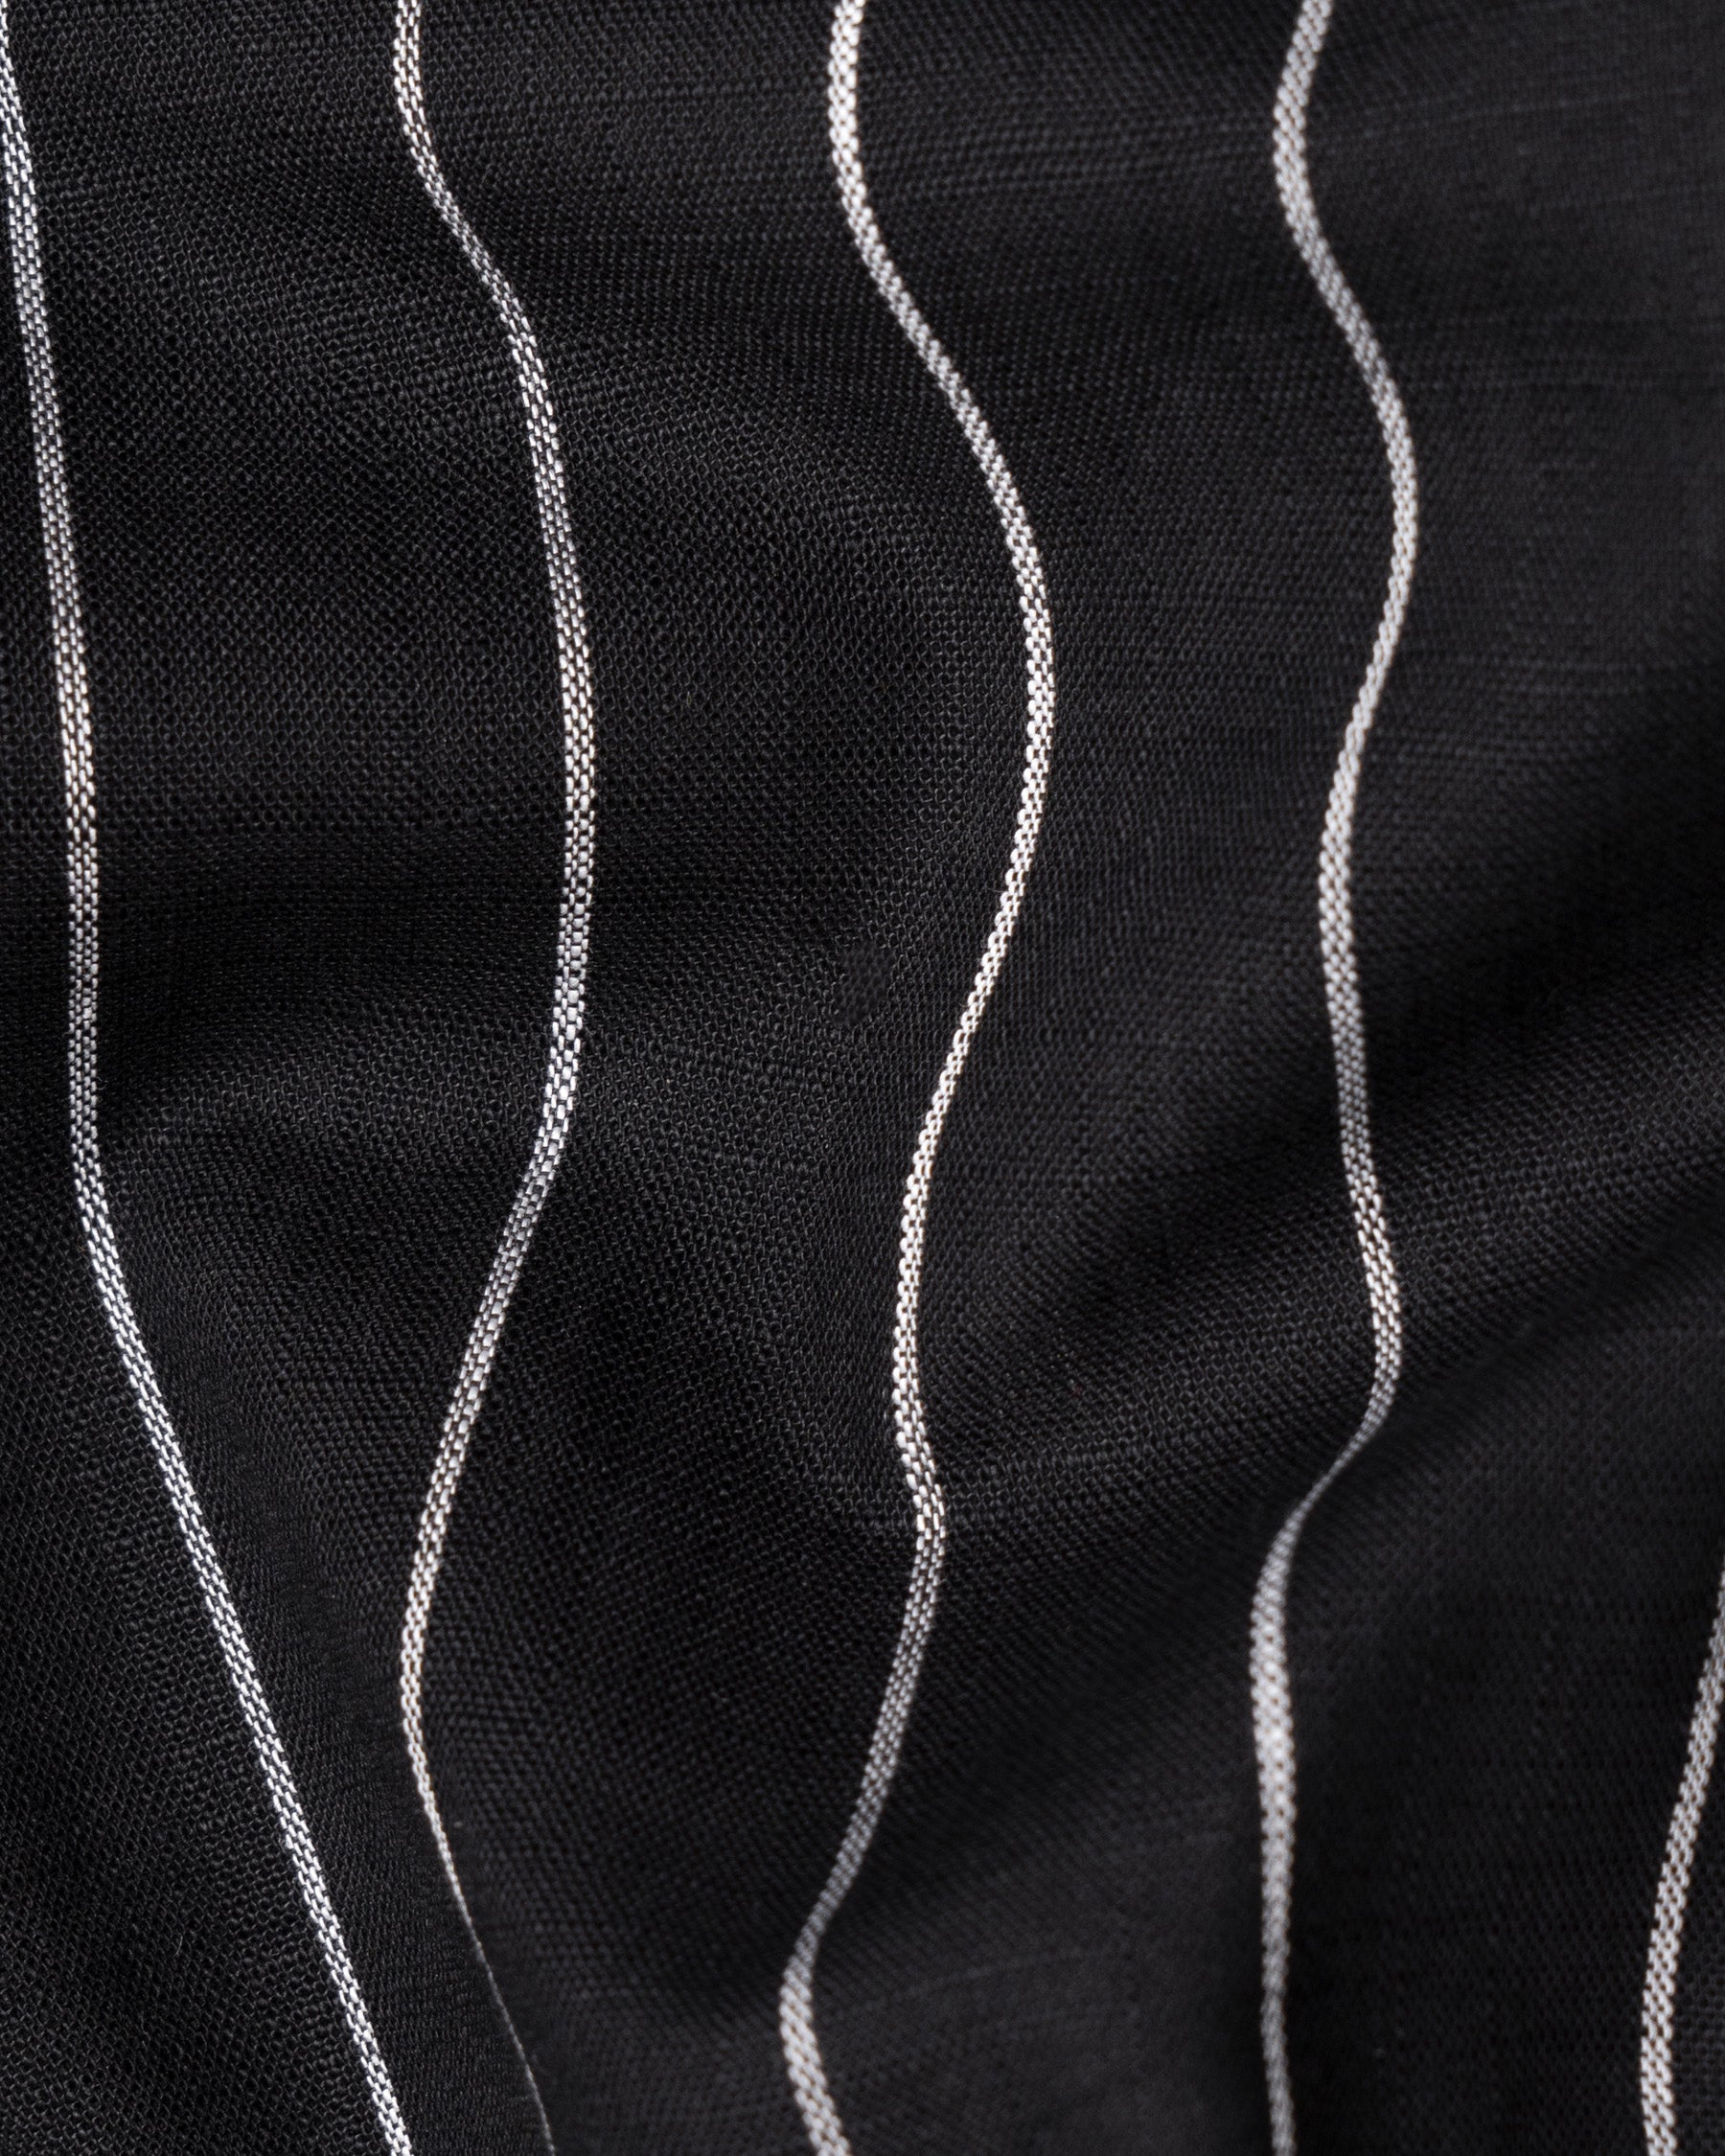 Jade Black with White Striped Dobby Textured Premium Giza Cotton Shirt 5348-BLK-38, 5348-BLK-H-38, 5348-BLK-39, 5348-BLK-H-39, 5348-BLK-40, 5348-BLK-H-40, 5348-BLK-42, 5348-BLK-H-42, 5348-BLK-44, 5348-BLK-H-44, 5348-BLK-46, 5348-BLK-H-46, 5348-BLK-48, 5348-BLK-H-48, 5348-BLK-50, 5348-BLK-H-50, 5348-BLK-52, 5348-BLK-H-52